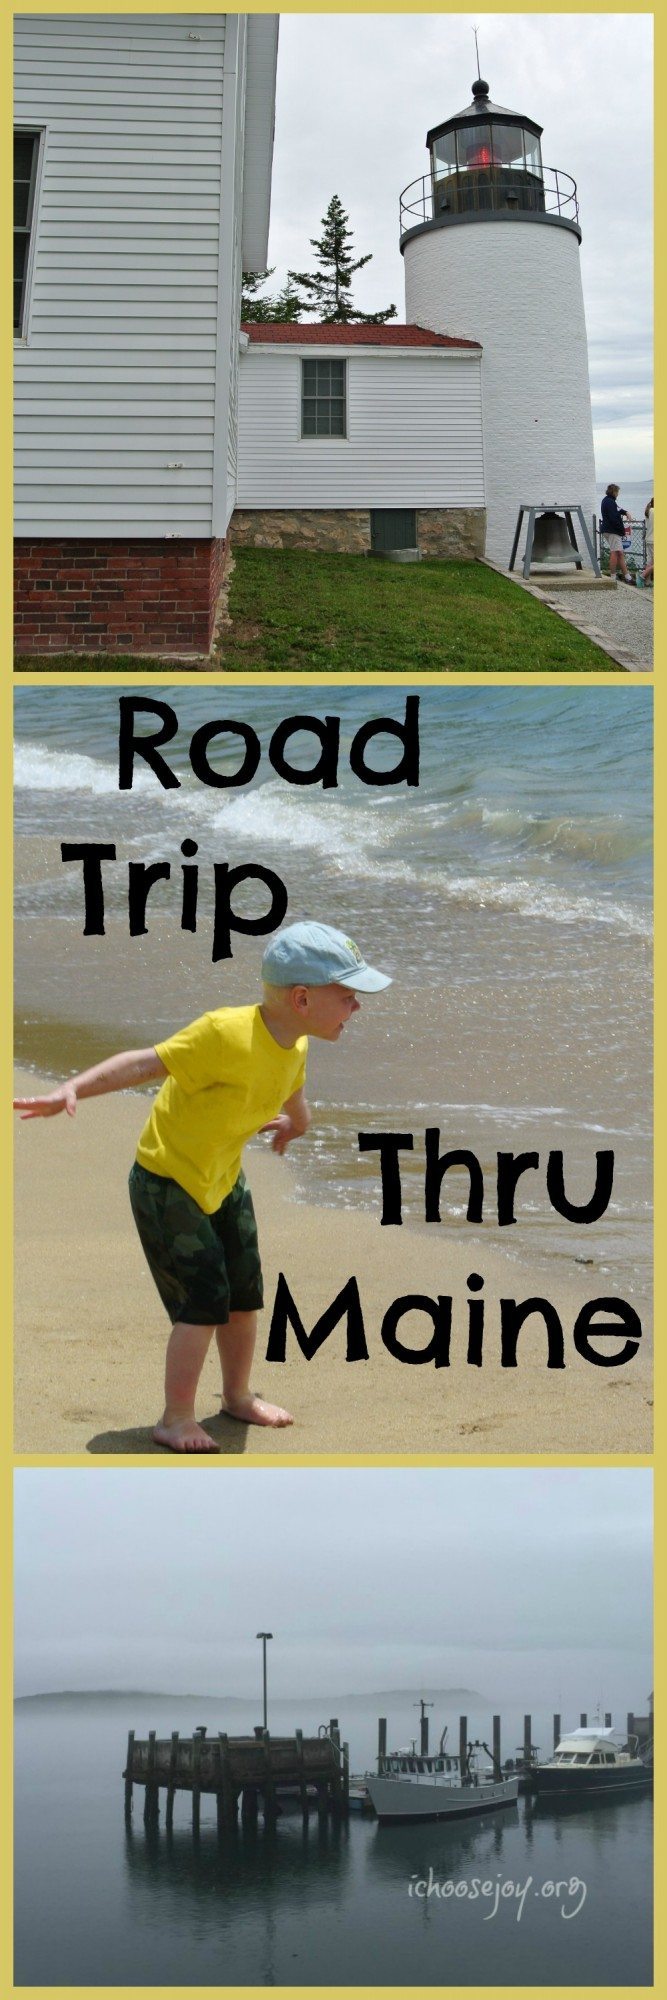 Road Trip Through Maine: Bar Harbor, Acadia National Park, lighthouses, lobsters. Read all about our fun family Maine vacation here! #maine #mainevacation #roadtrip #familyroadtrip #ichoosejoyblog